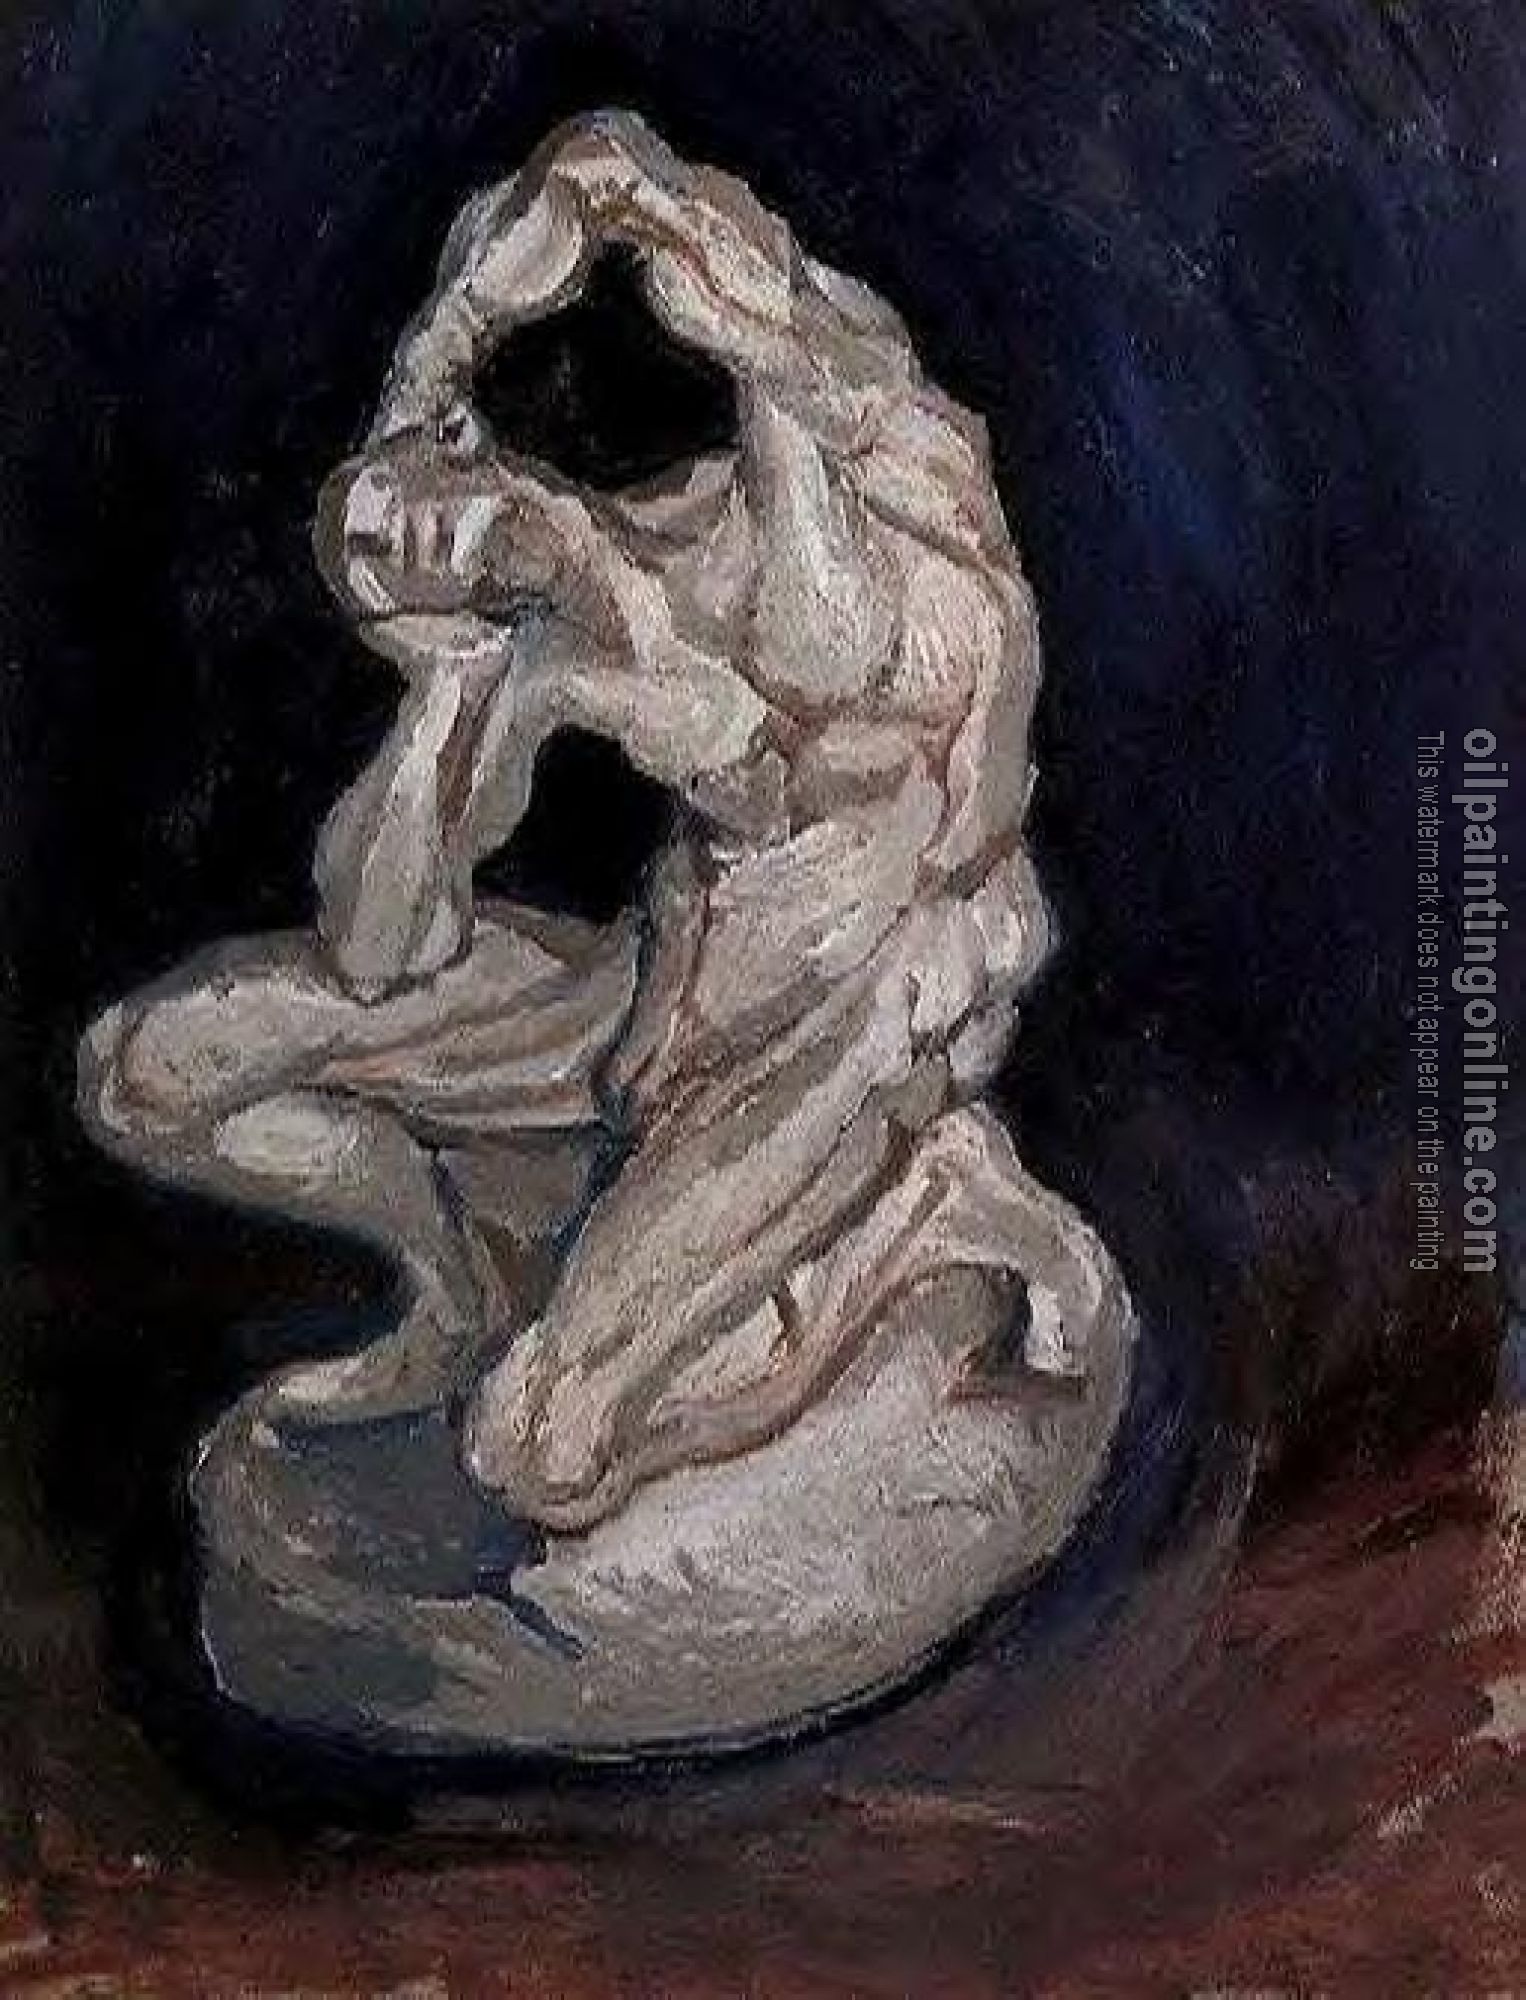 Gogh, Vincent van - Plaster Statuette of a Kneeling Man